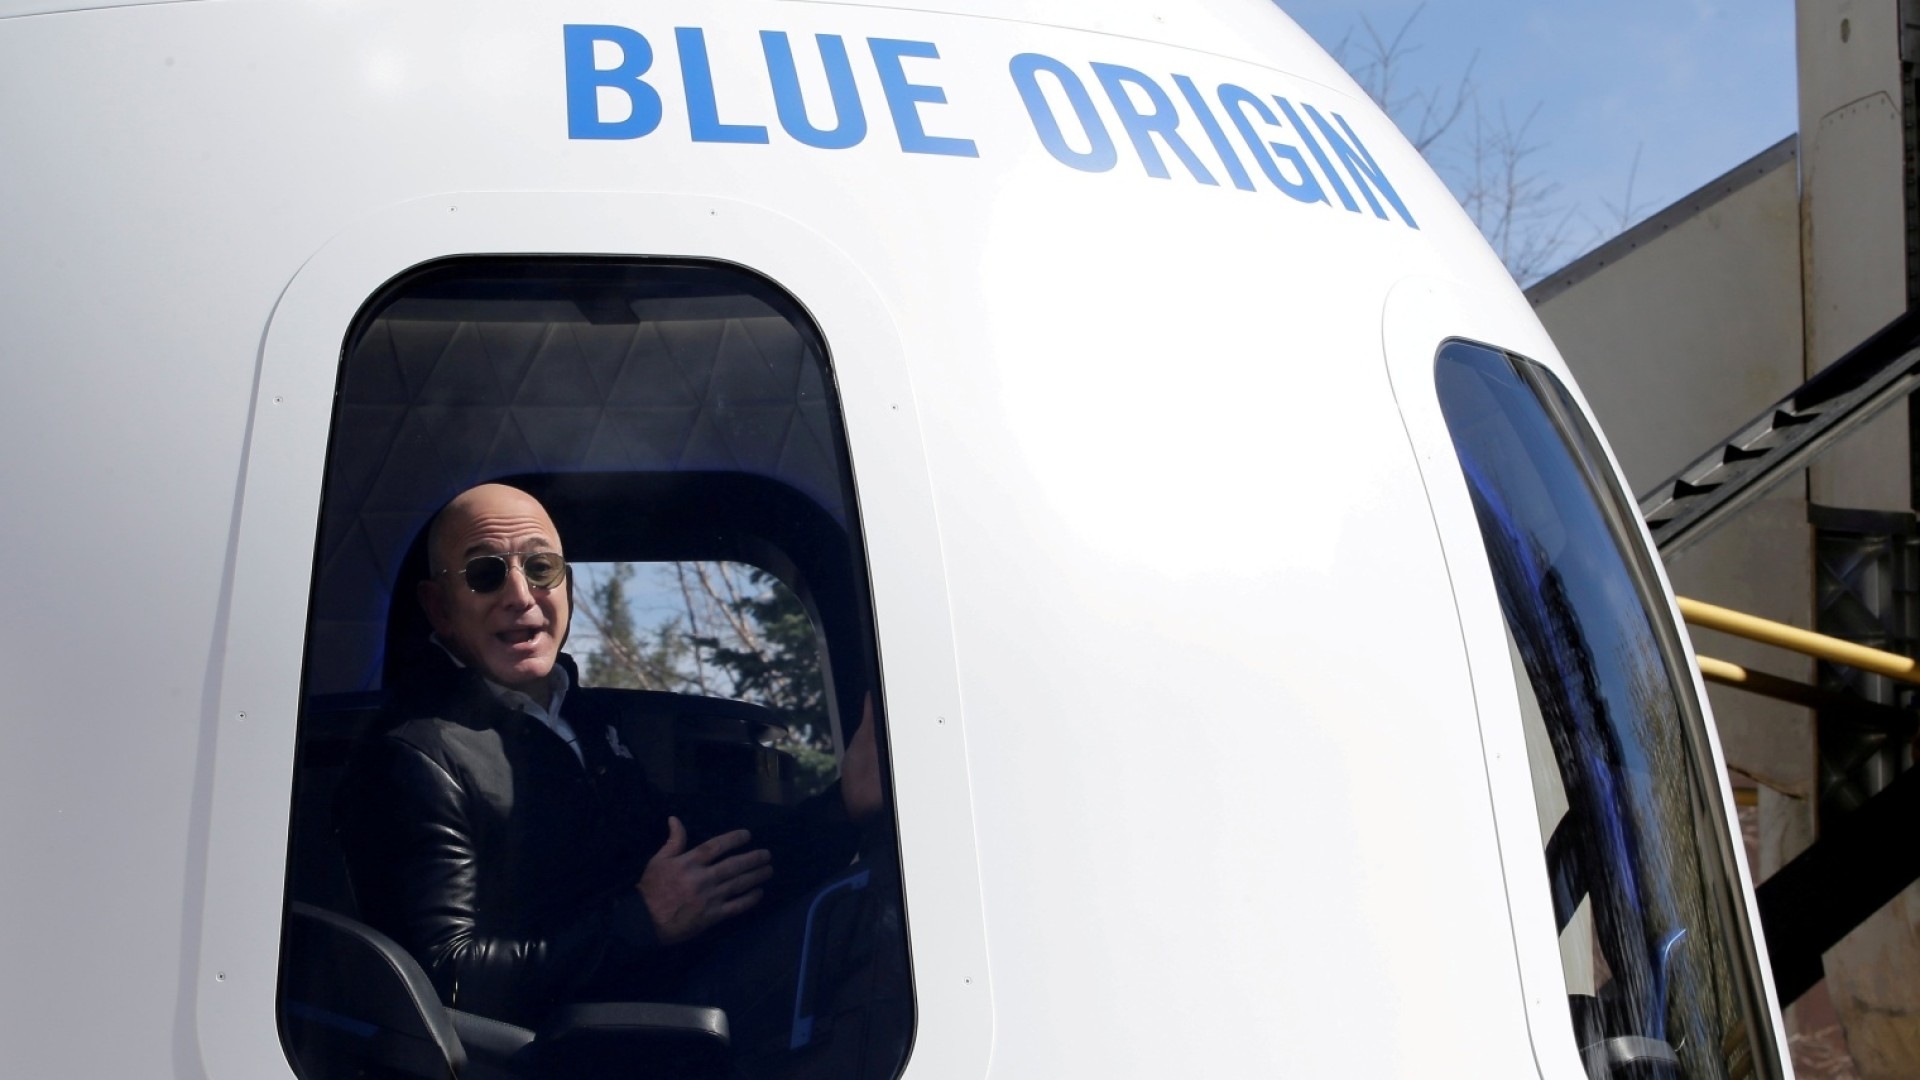 Jeff Bezos' to make historic flight into space